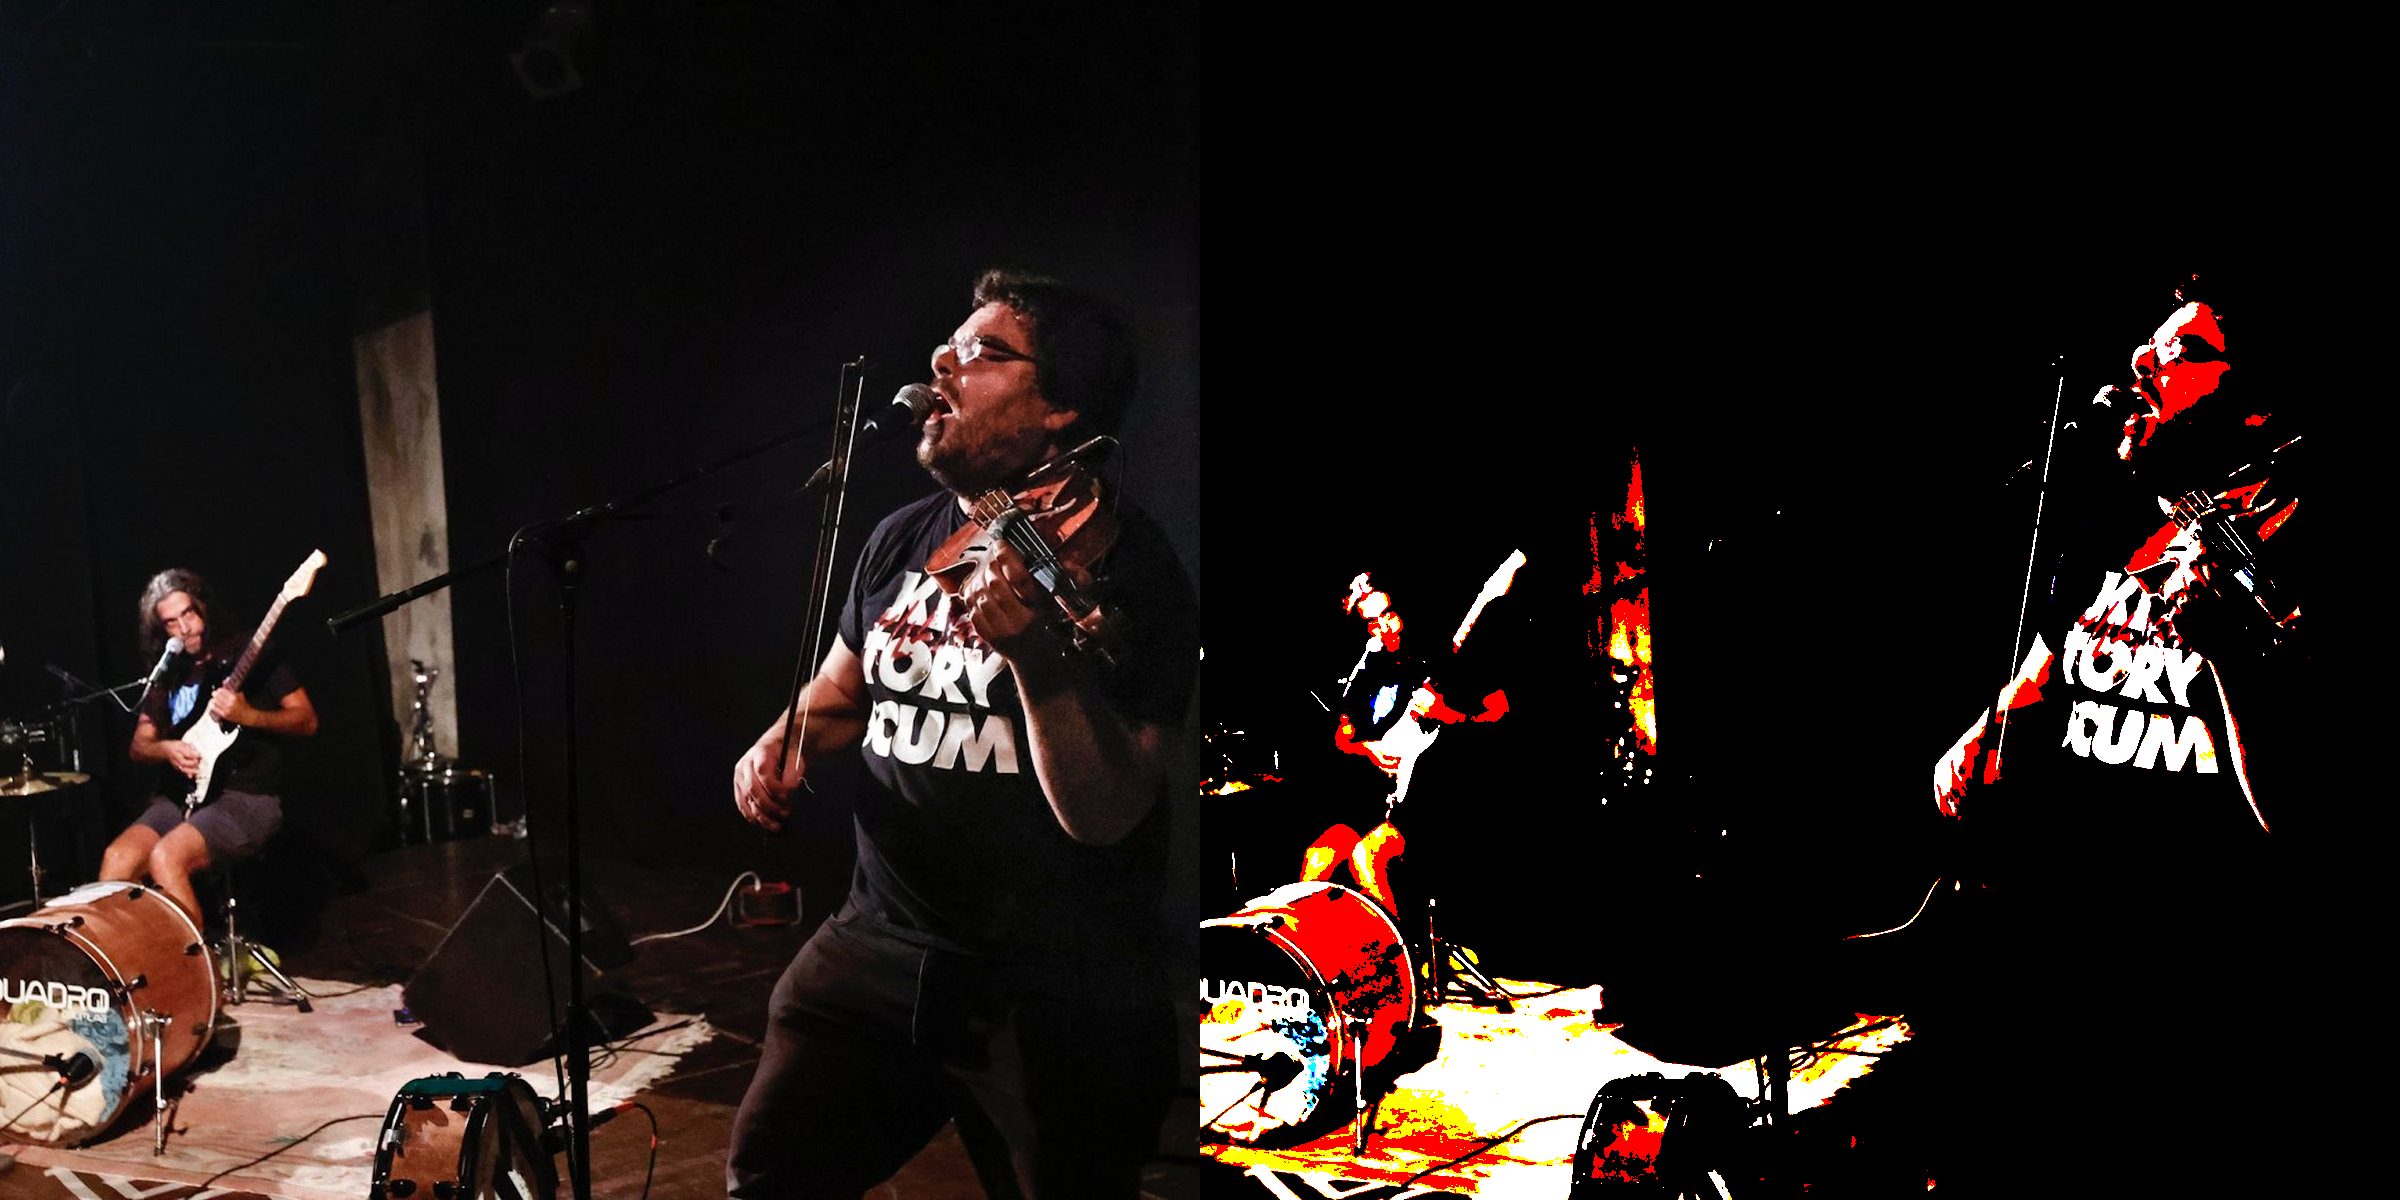 Photos of Paul and Tony of Circolo Vizioso, of the German punk rock band Circolo Vizioso.